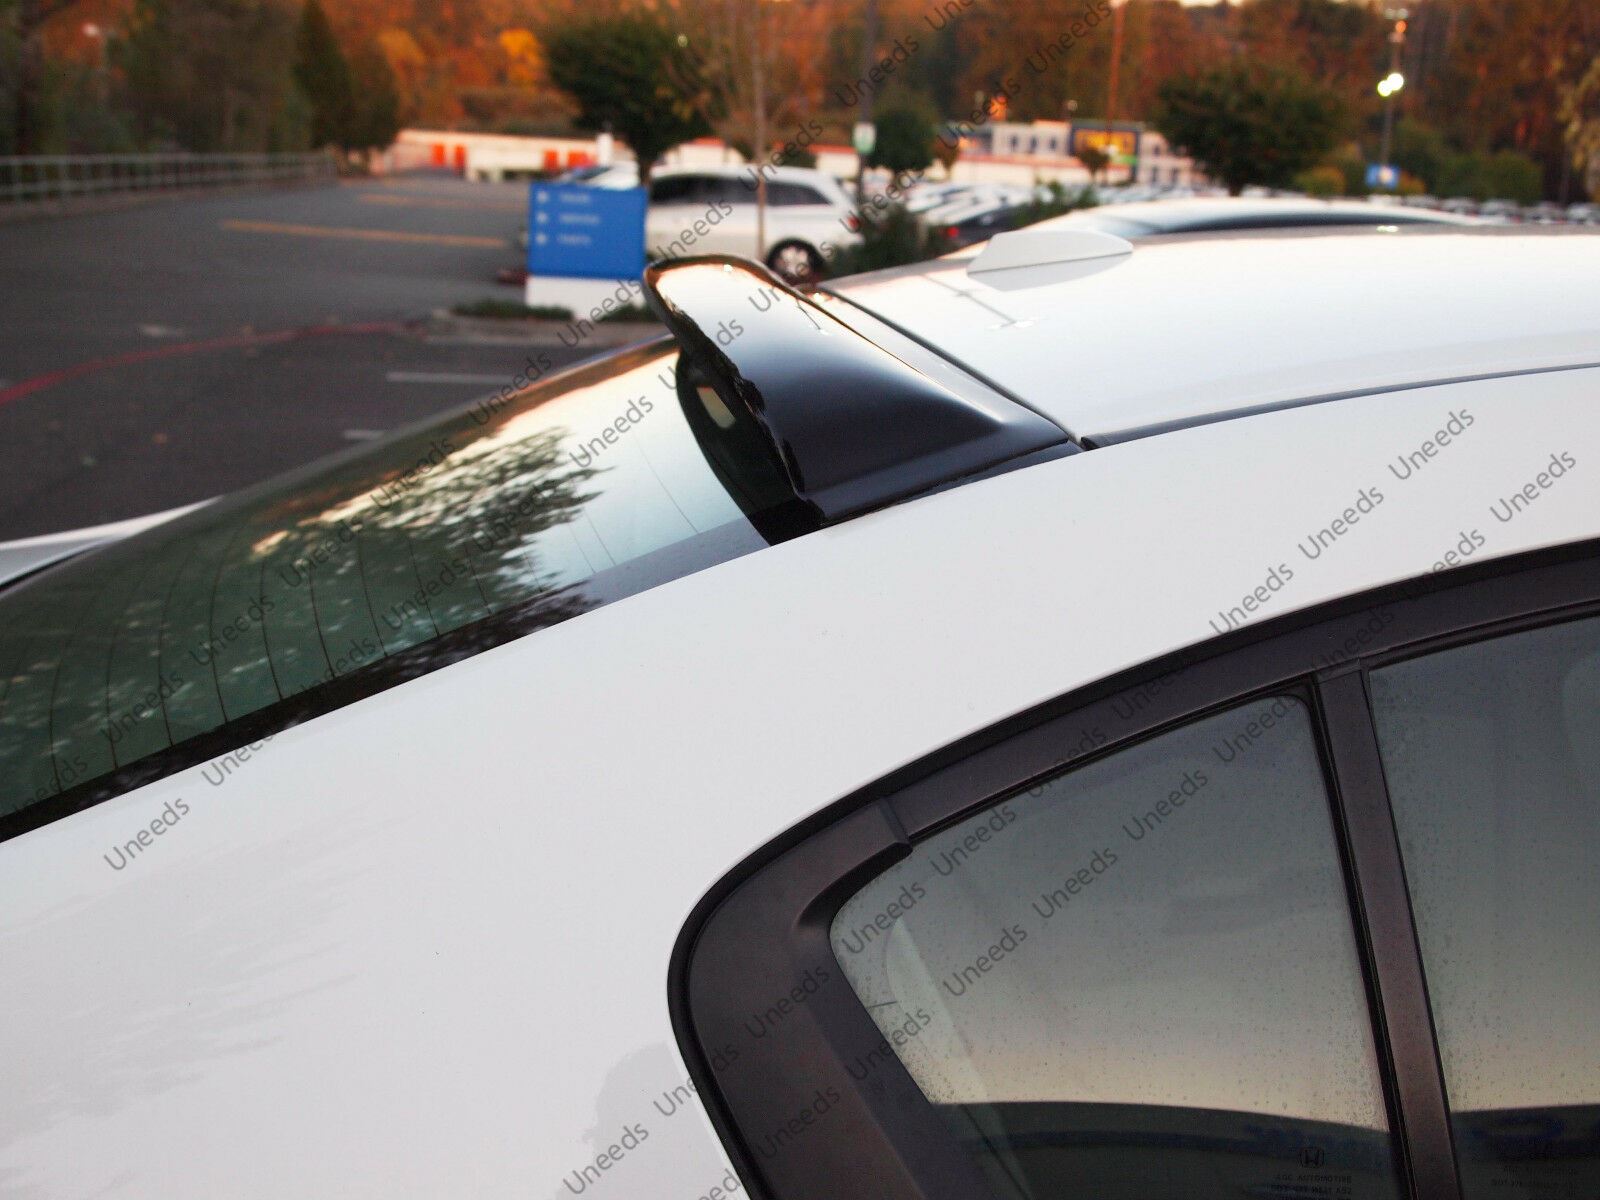 Ajuste 2012-2015 Honda Civic 4Dr ABS negro techo trasero ventana visera Spoiler 3D JDM